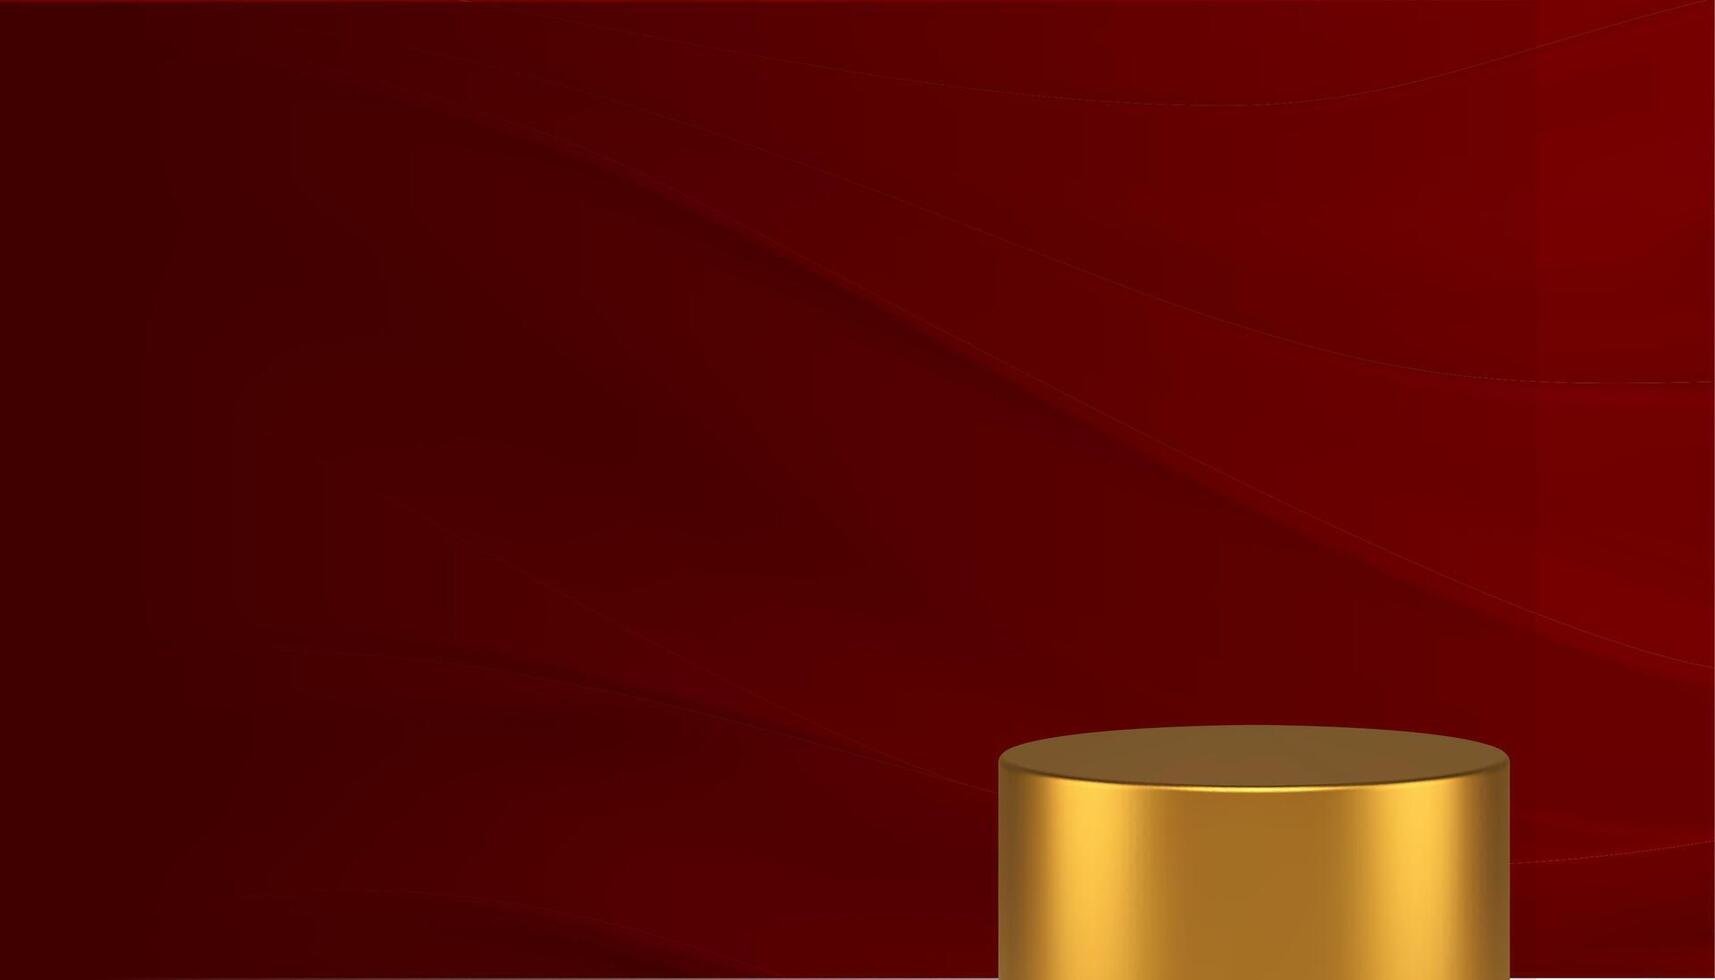 cilindro dorado 3d podio pedestal elegante curvo ola rojo pared antecedentes realista vector